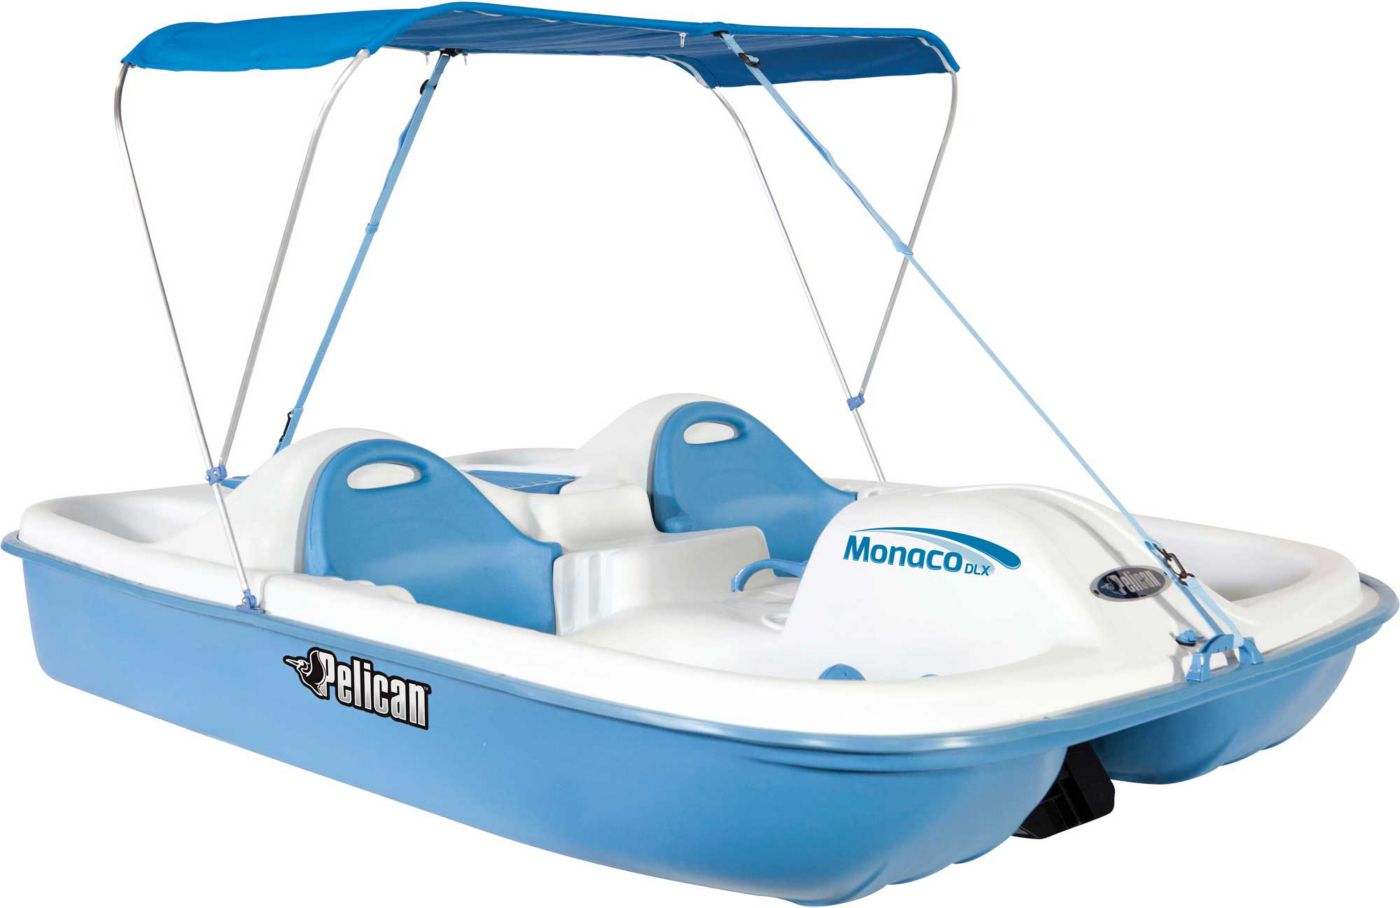 Pelican Monaco DLX Pedal Boat DICK'S Sporting Goods